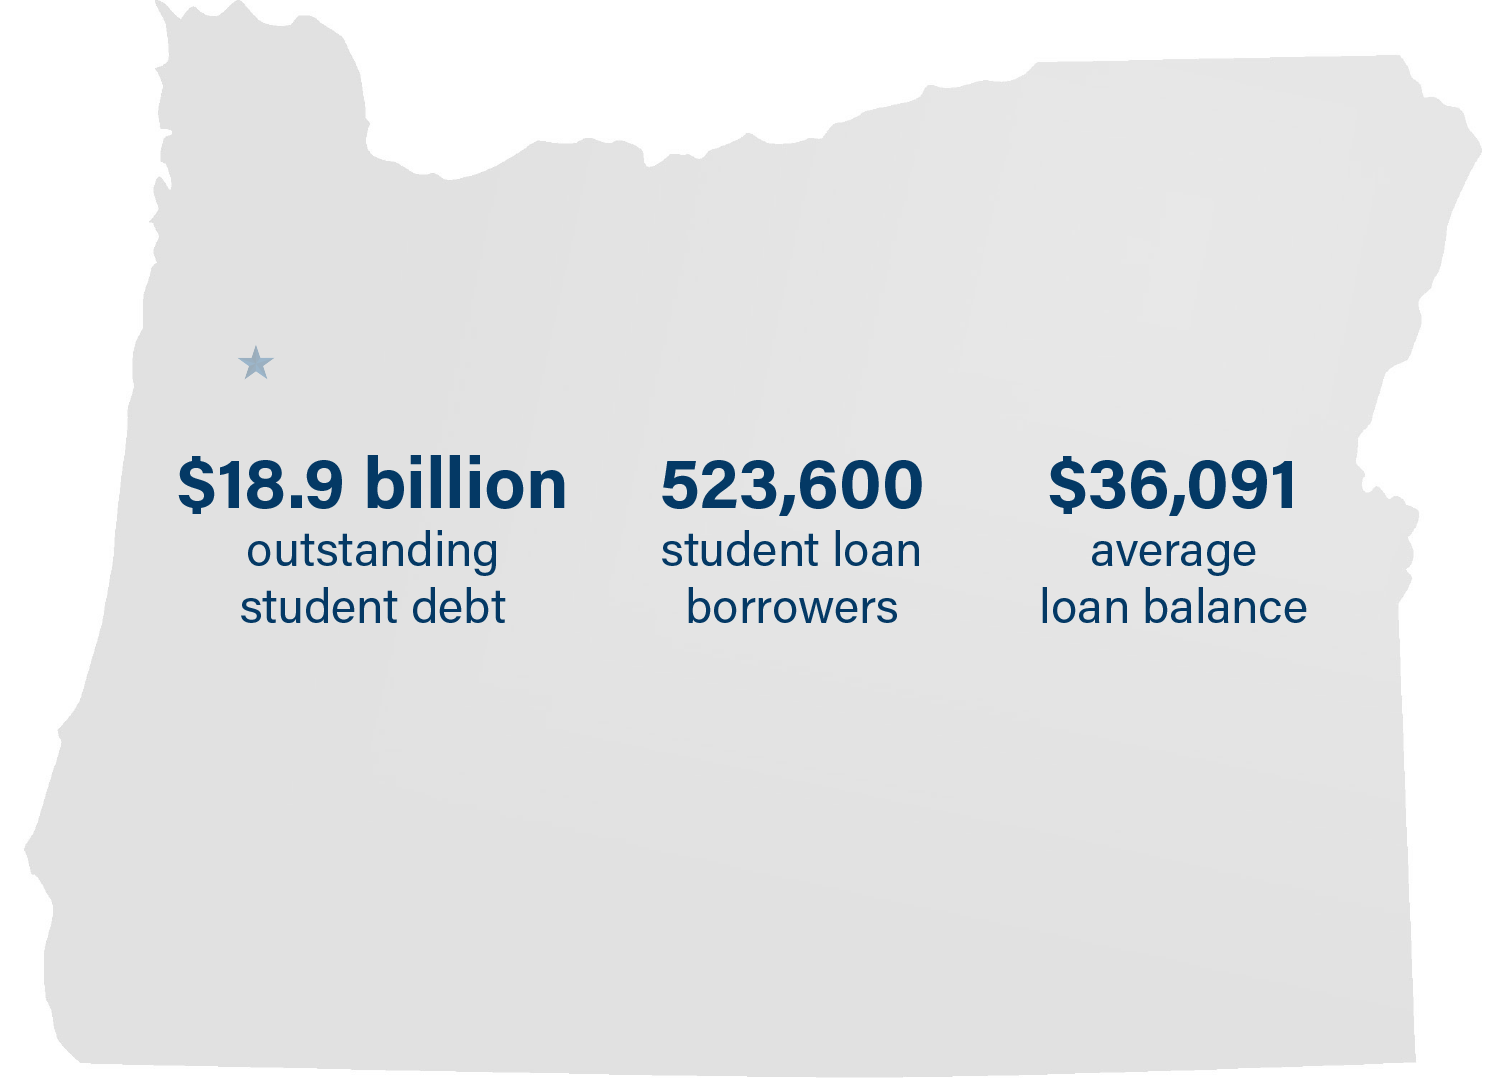 Oregon student loan statistics:

$18.9 billion in outstanding student debt
523,600 student loan borrowers
$36,091 average student loan balance